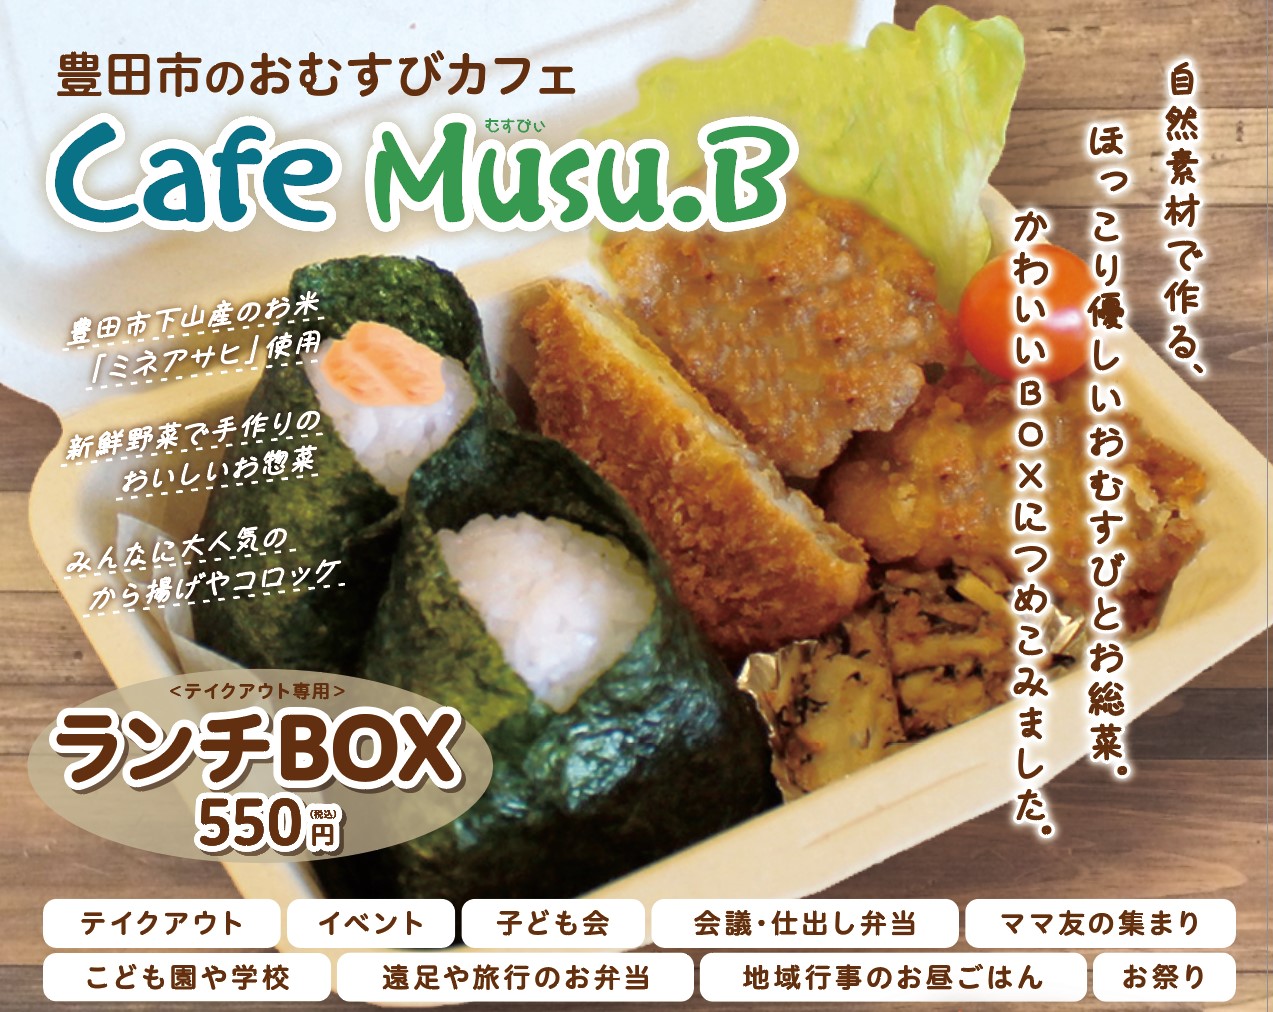 Cafe Musu.B